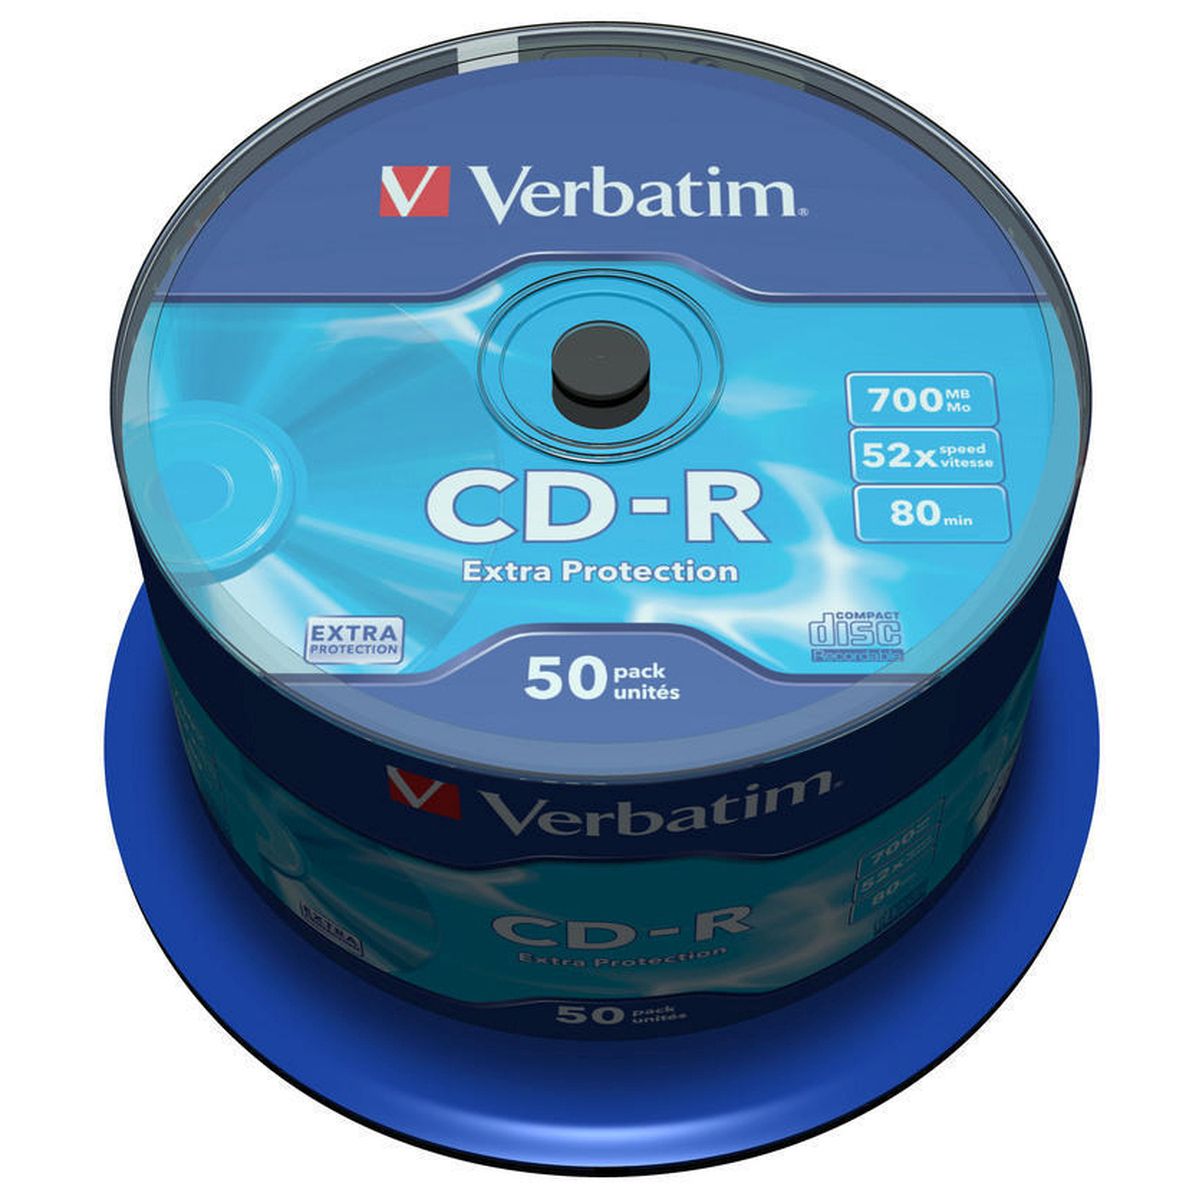 Płyta cd Verbatim CD-R cake 50 700MB x52 (43351)